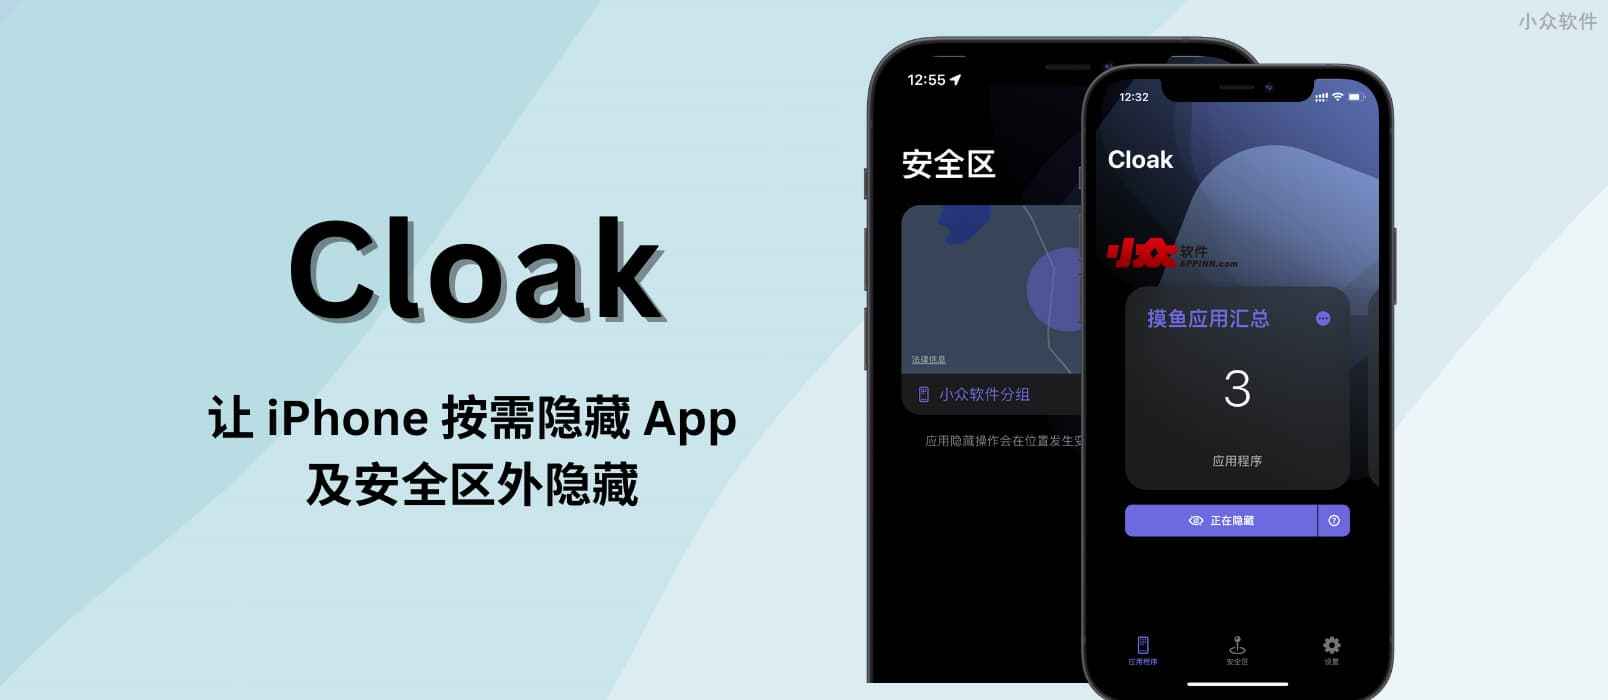 Cloak – 让 iPhone 隐藏 App，支持基于地理位置的自动隐藏